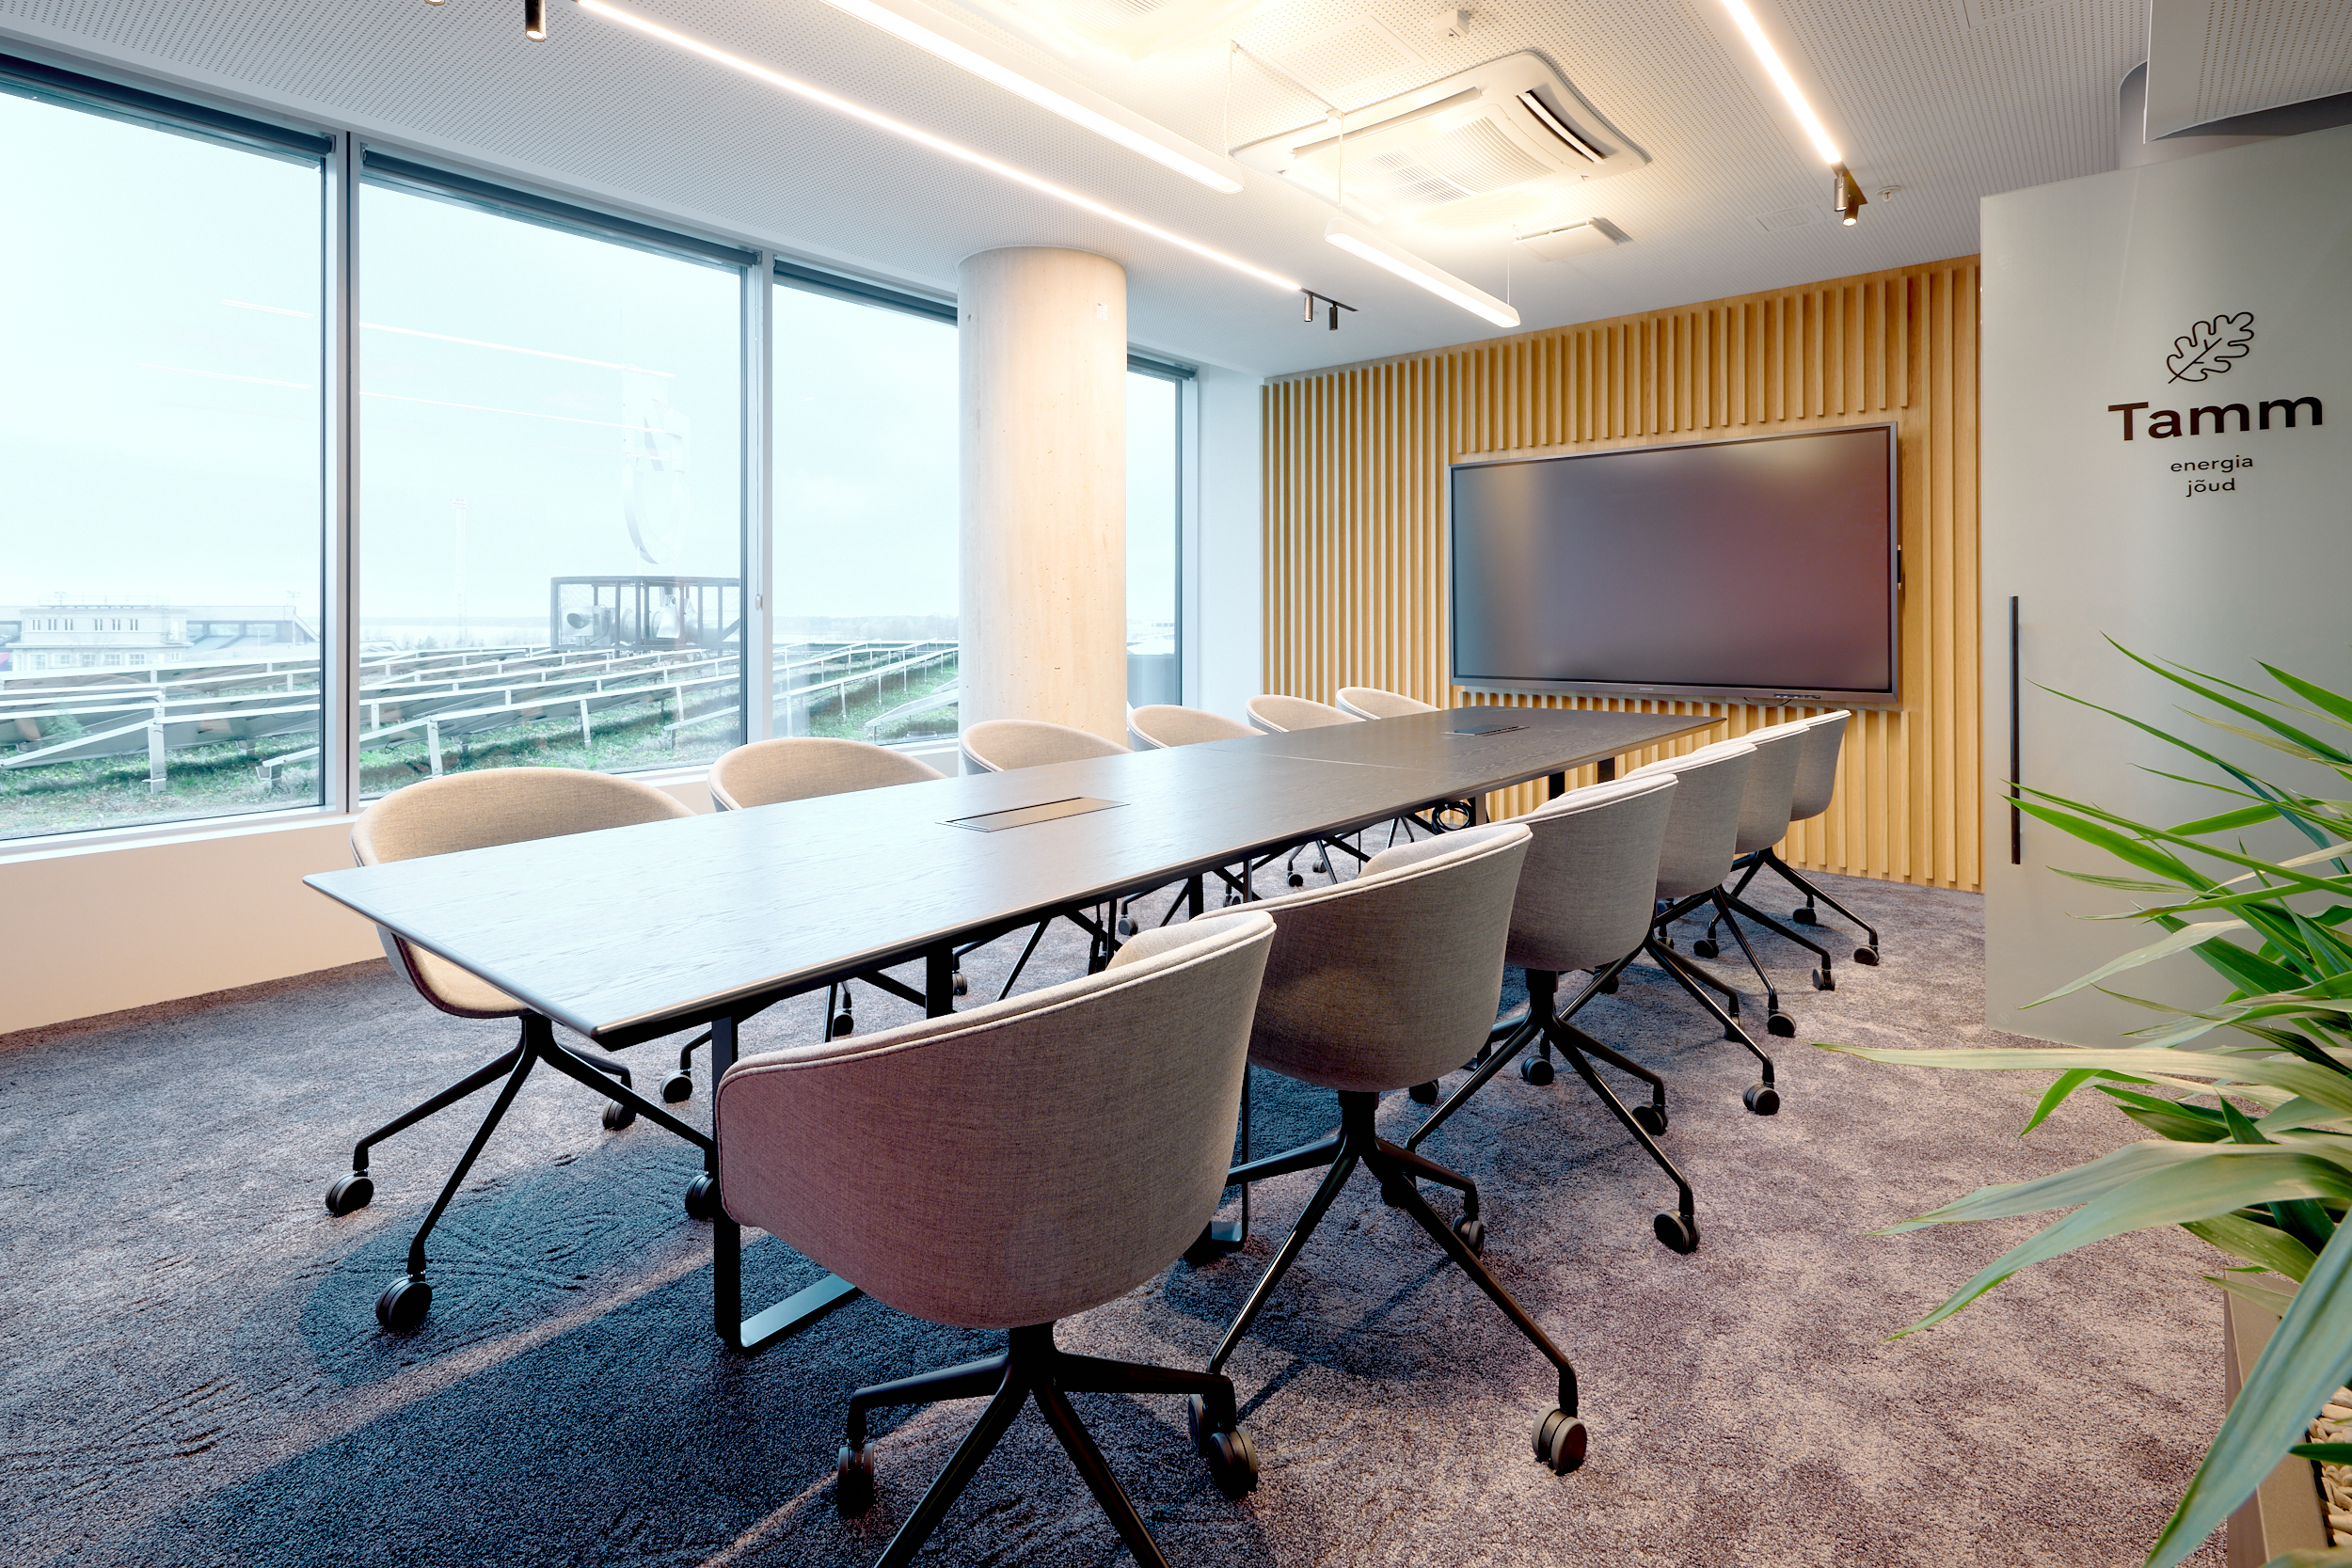 <img src="meeting room.jpg" alt="Fujitsu meeting room" />